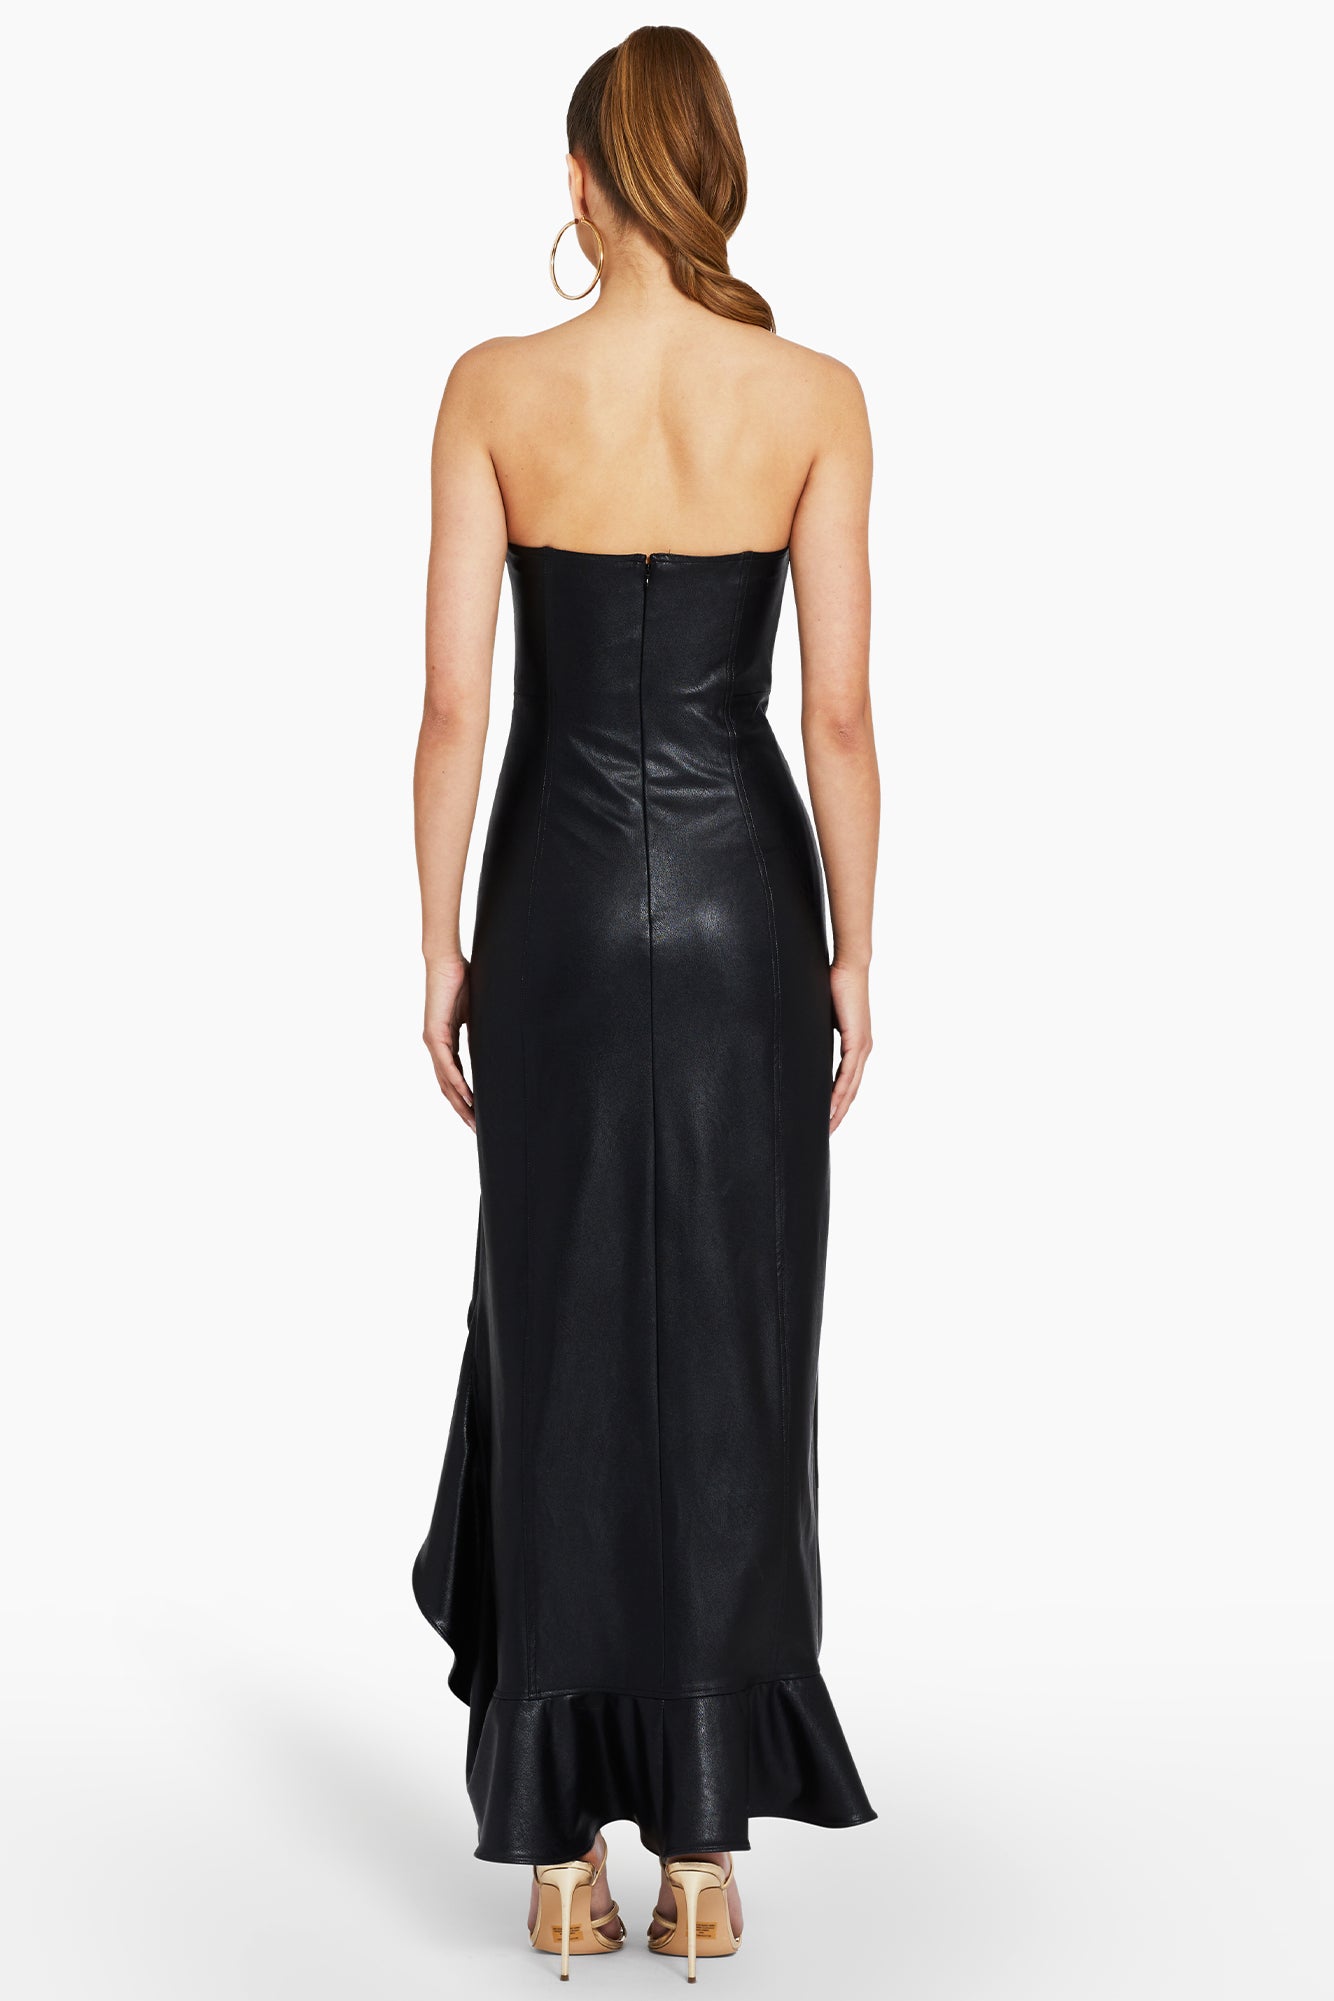 Cecilia De Bucourt X Free People Goddess Maxi Dress Black Leather Trim NWT  XS | eBay